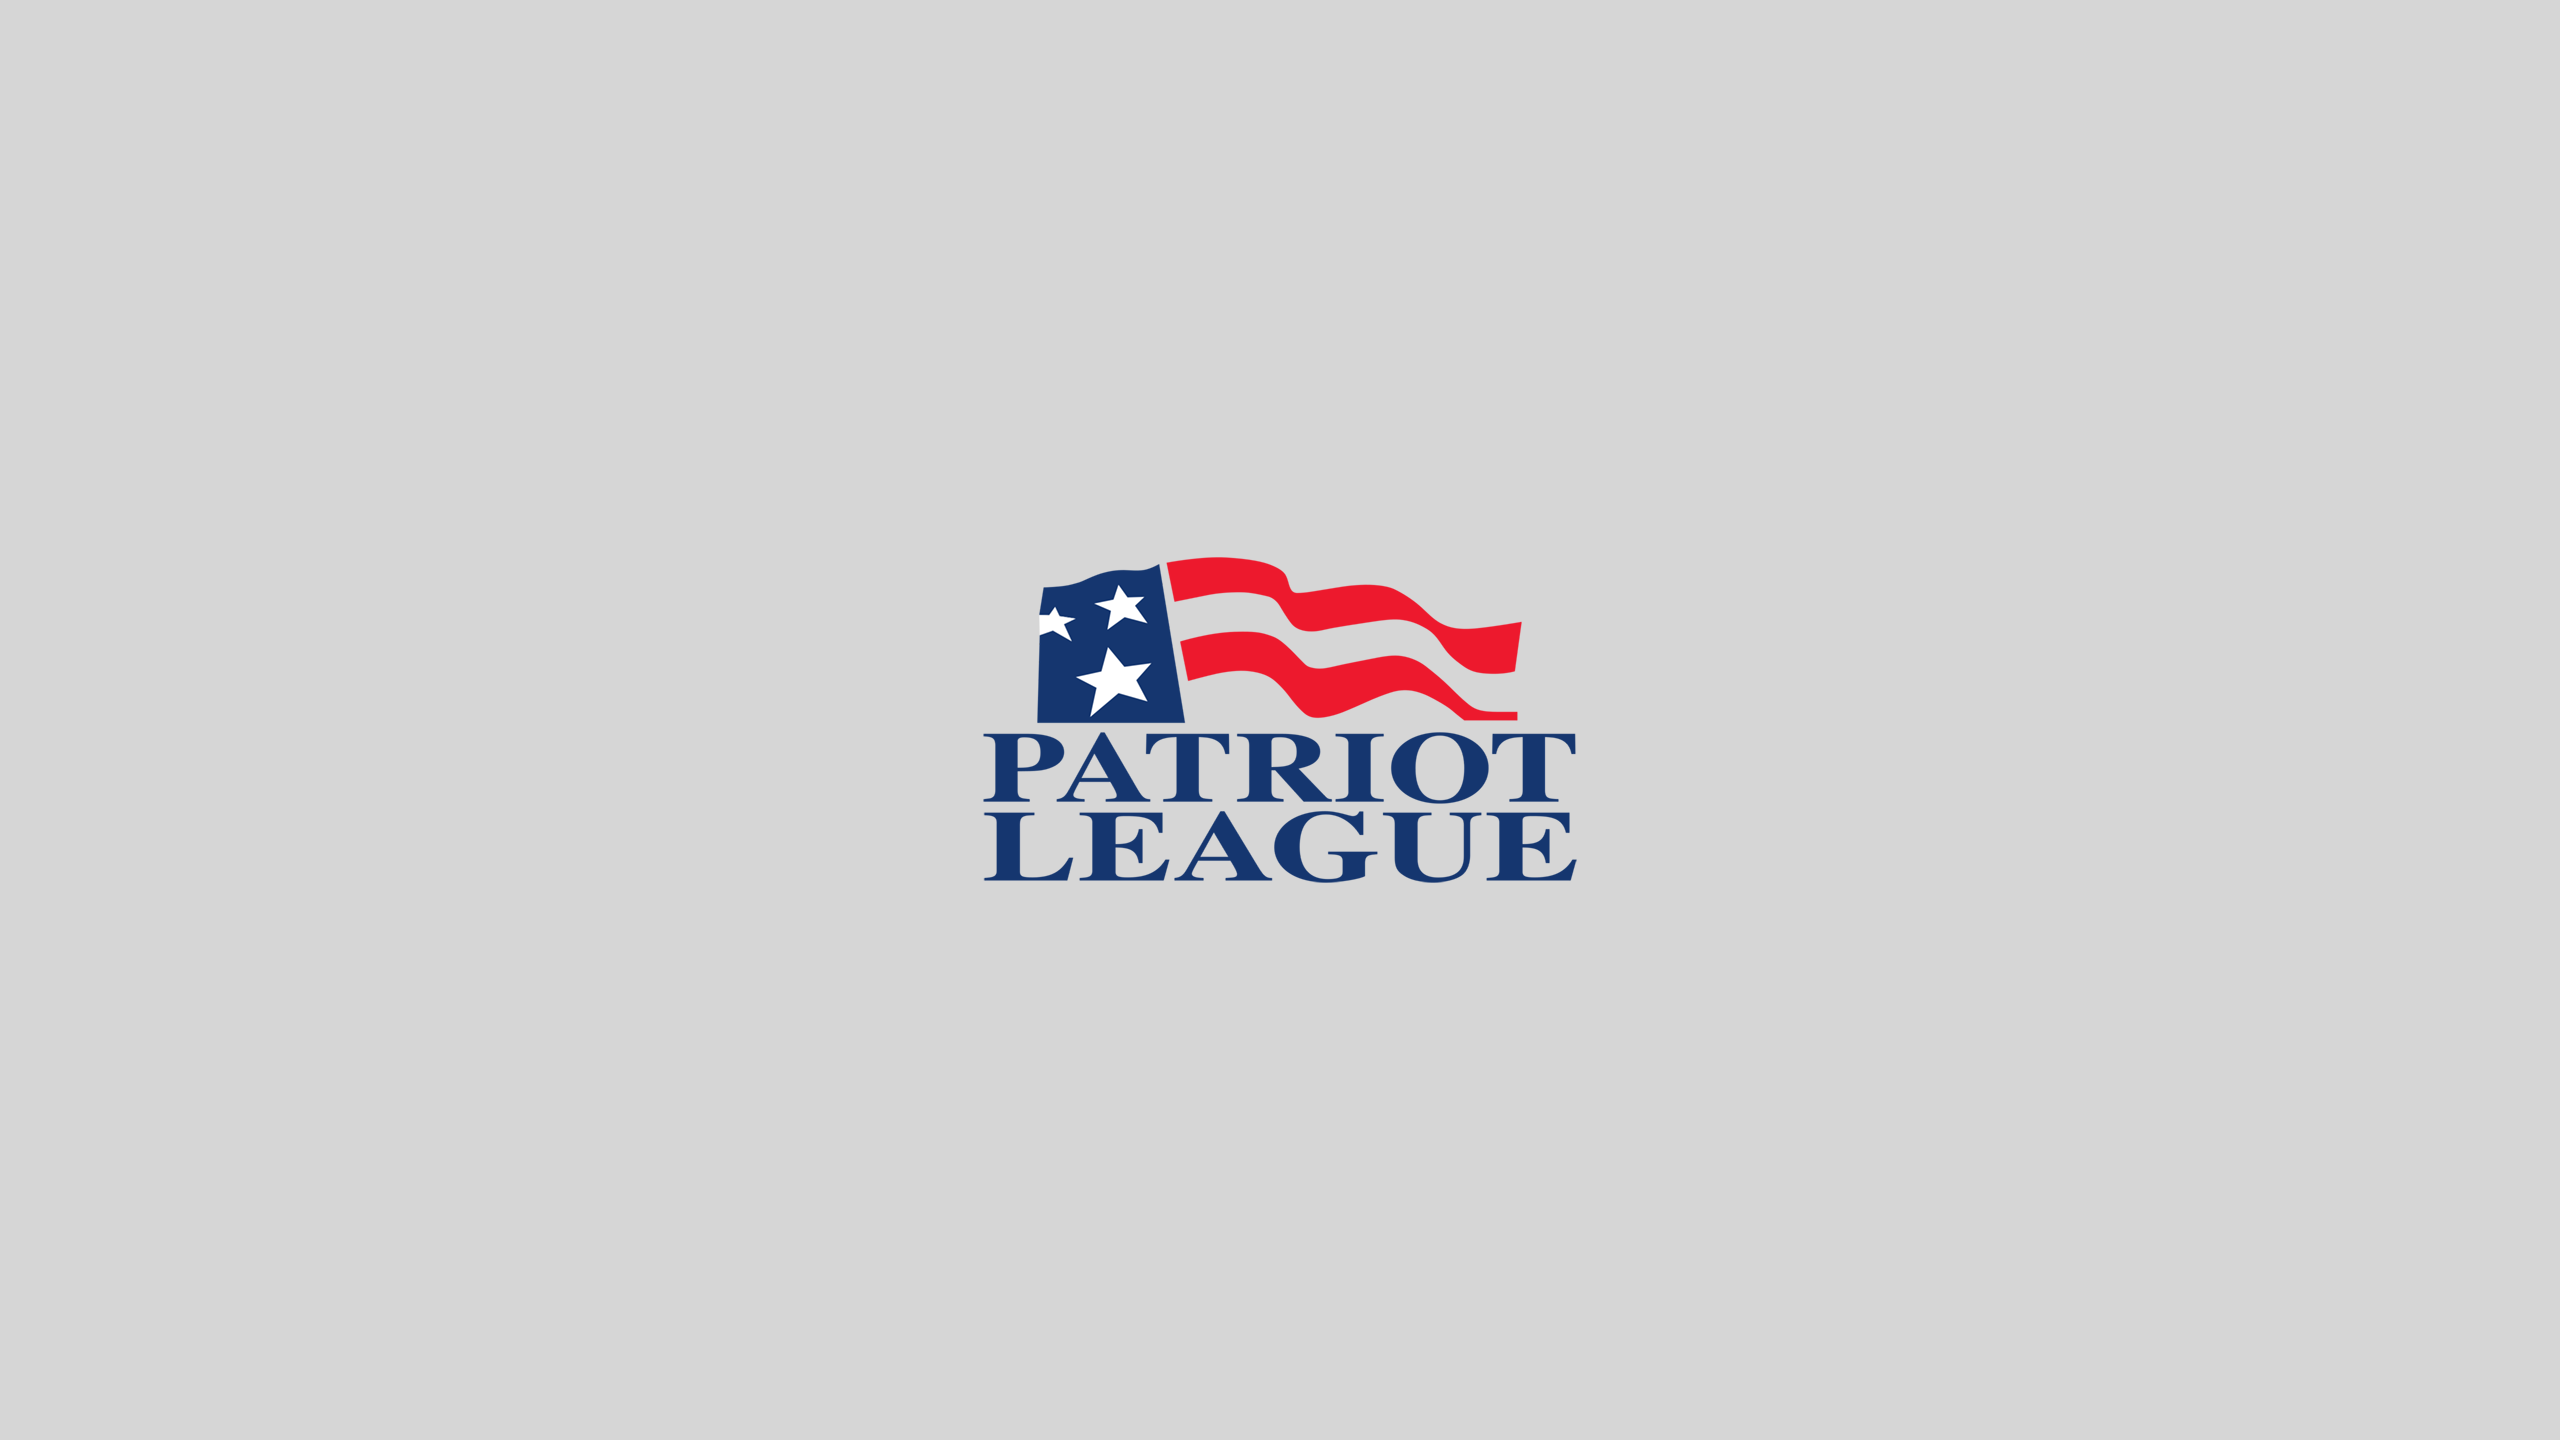 Patriot League Basketball - NCAAB - Square Bettor